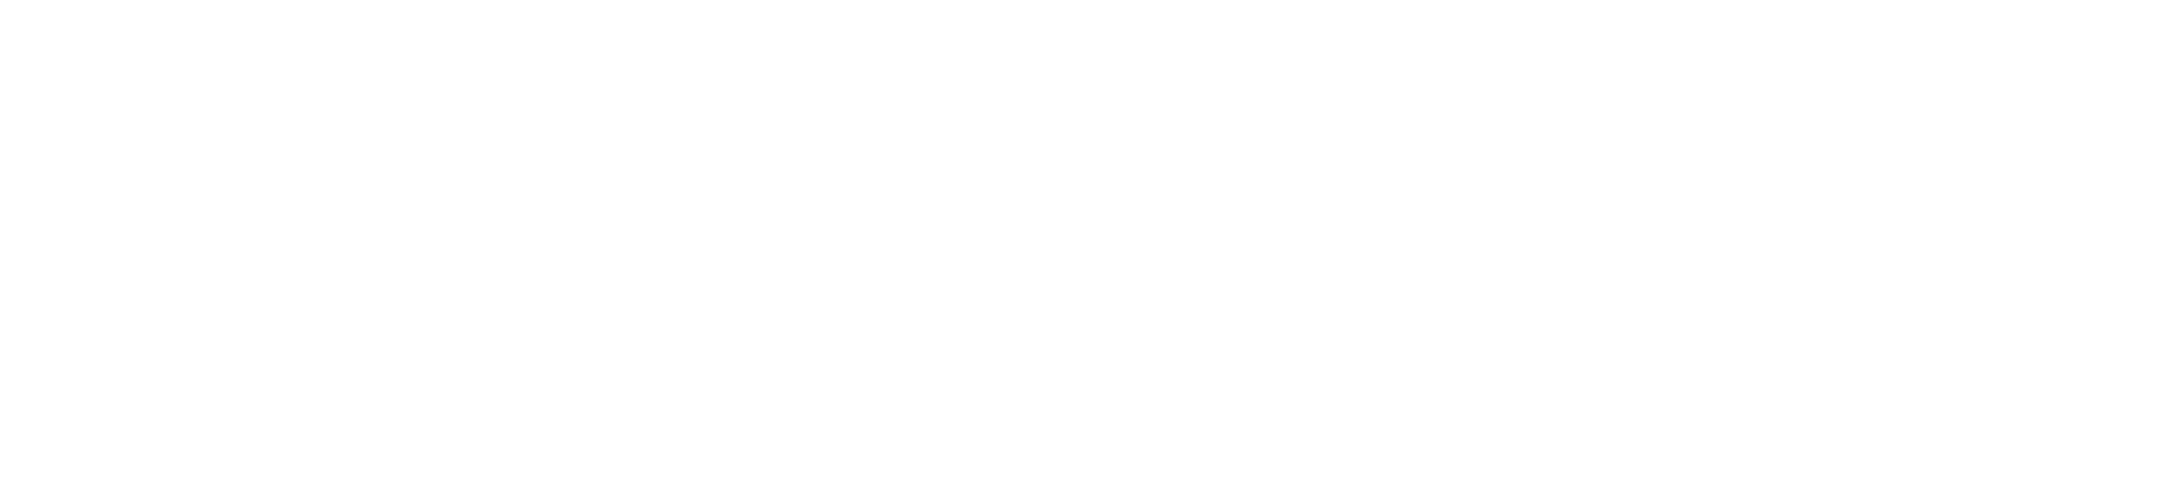 Filer Credit Union Logo